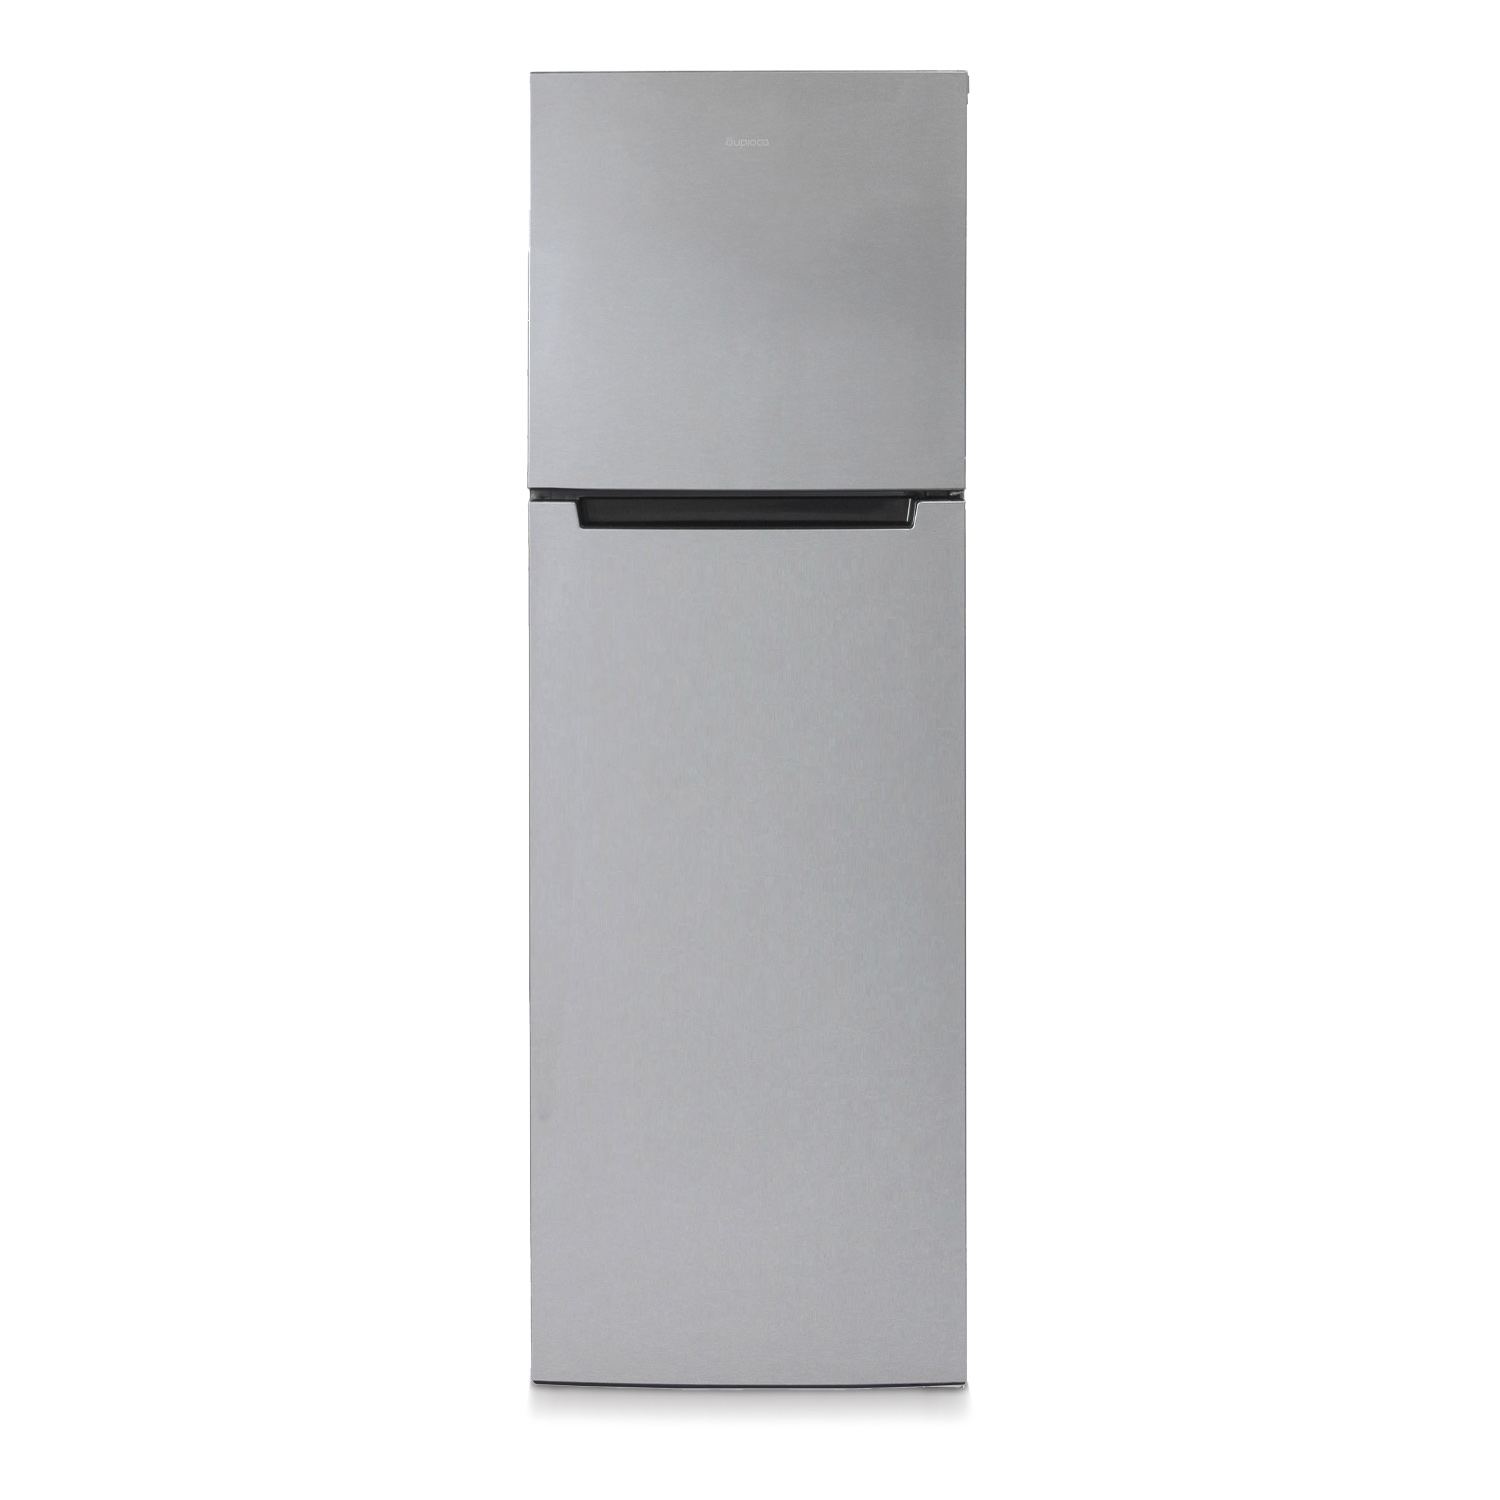 Холодильник Бирюса C6039 серебристый холодильник бирюса m122 серебристый